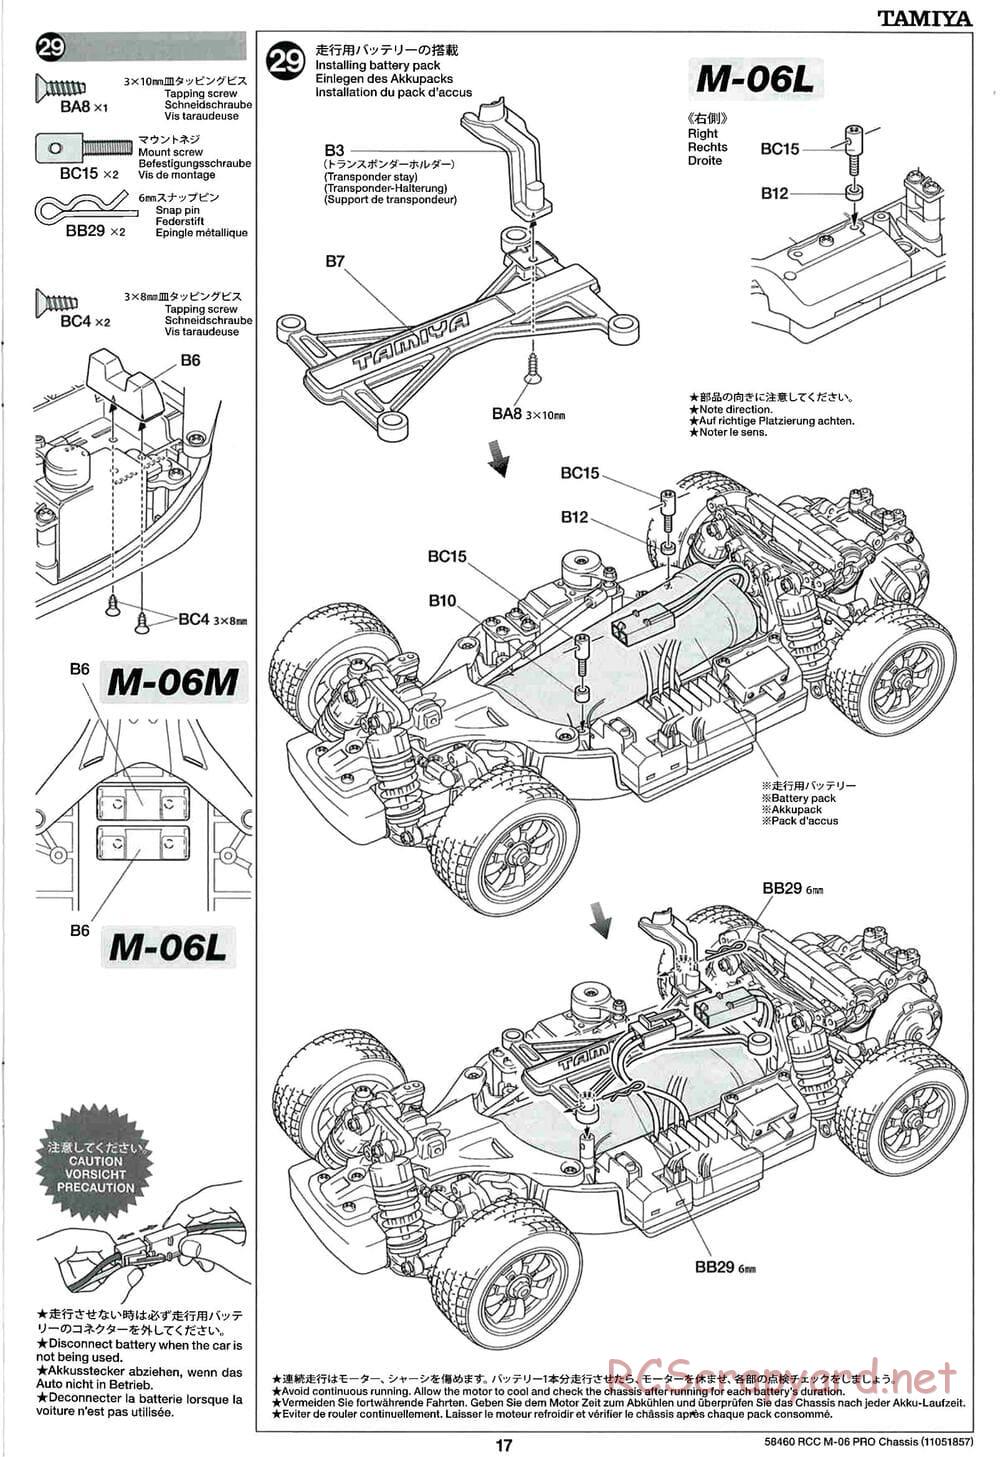 Tamiya - M-06 Pro Chassis - Manual - Page 17